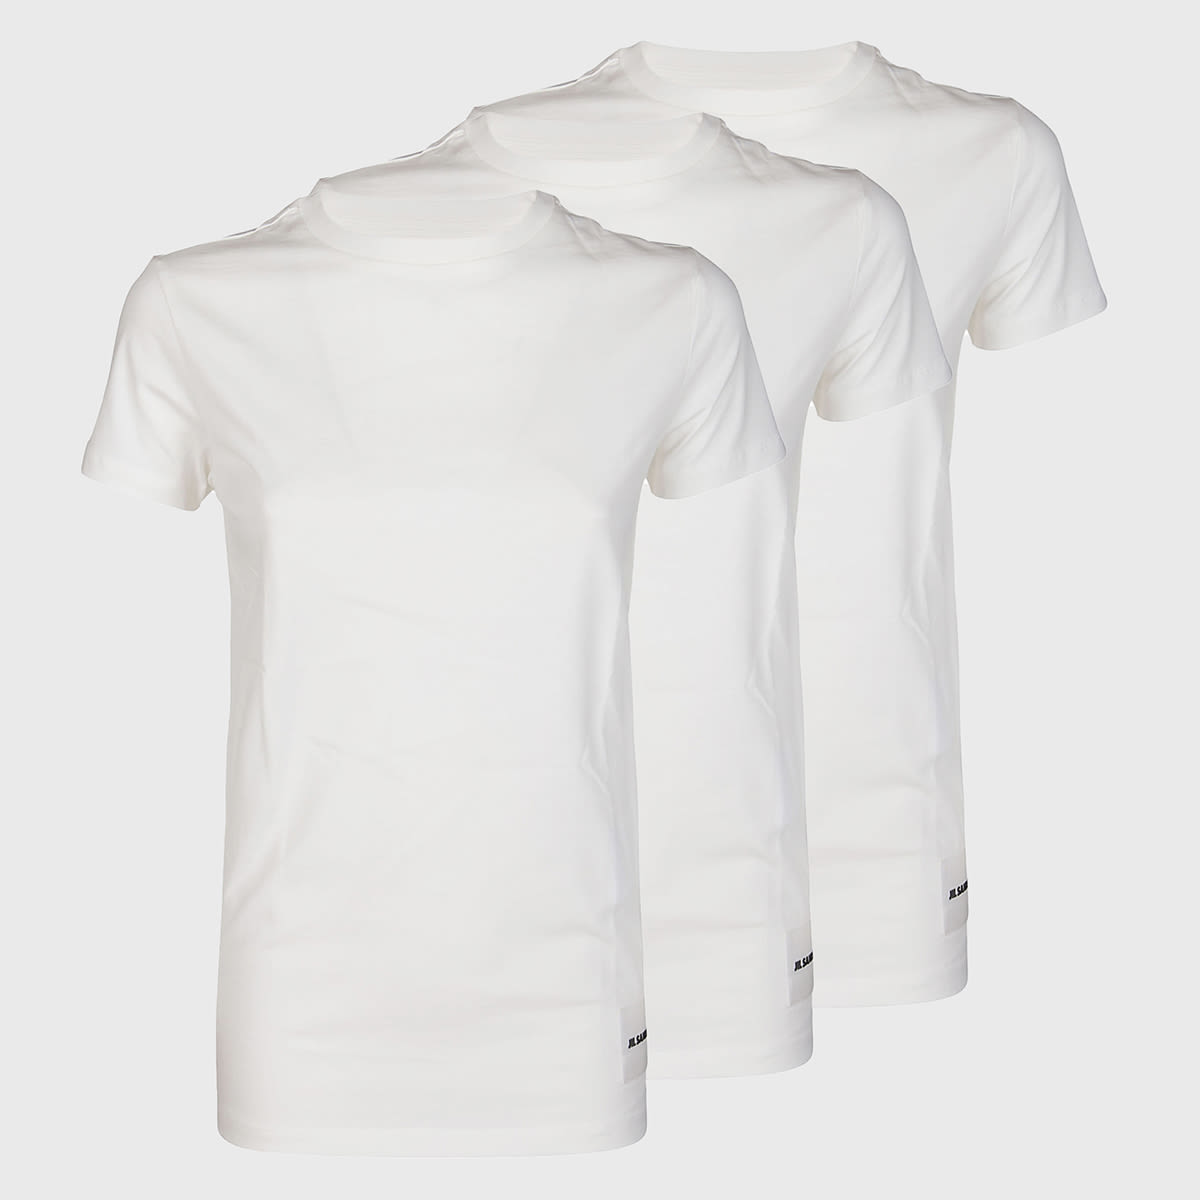 White Cotton 3 Pack Tshirt